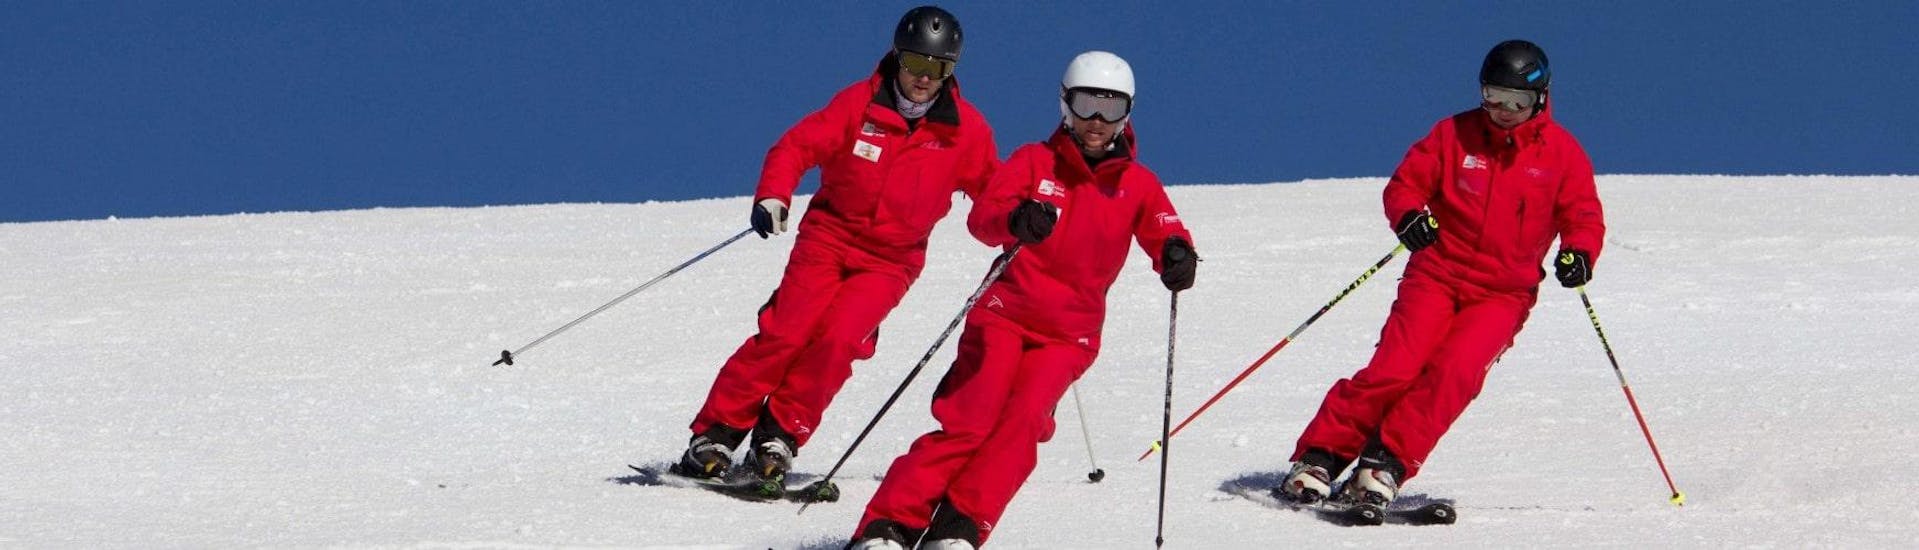 Lezioni private di sci per adulti a partire da 16 anni per tutti i livelli.